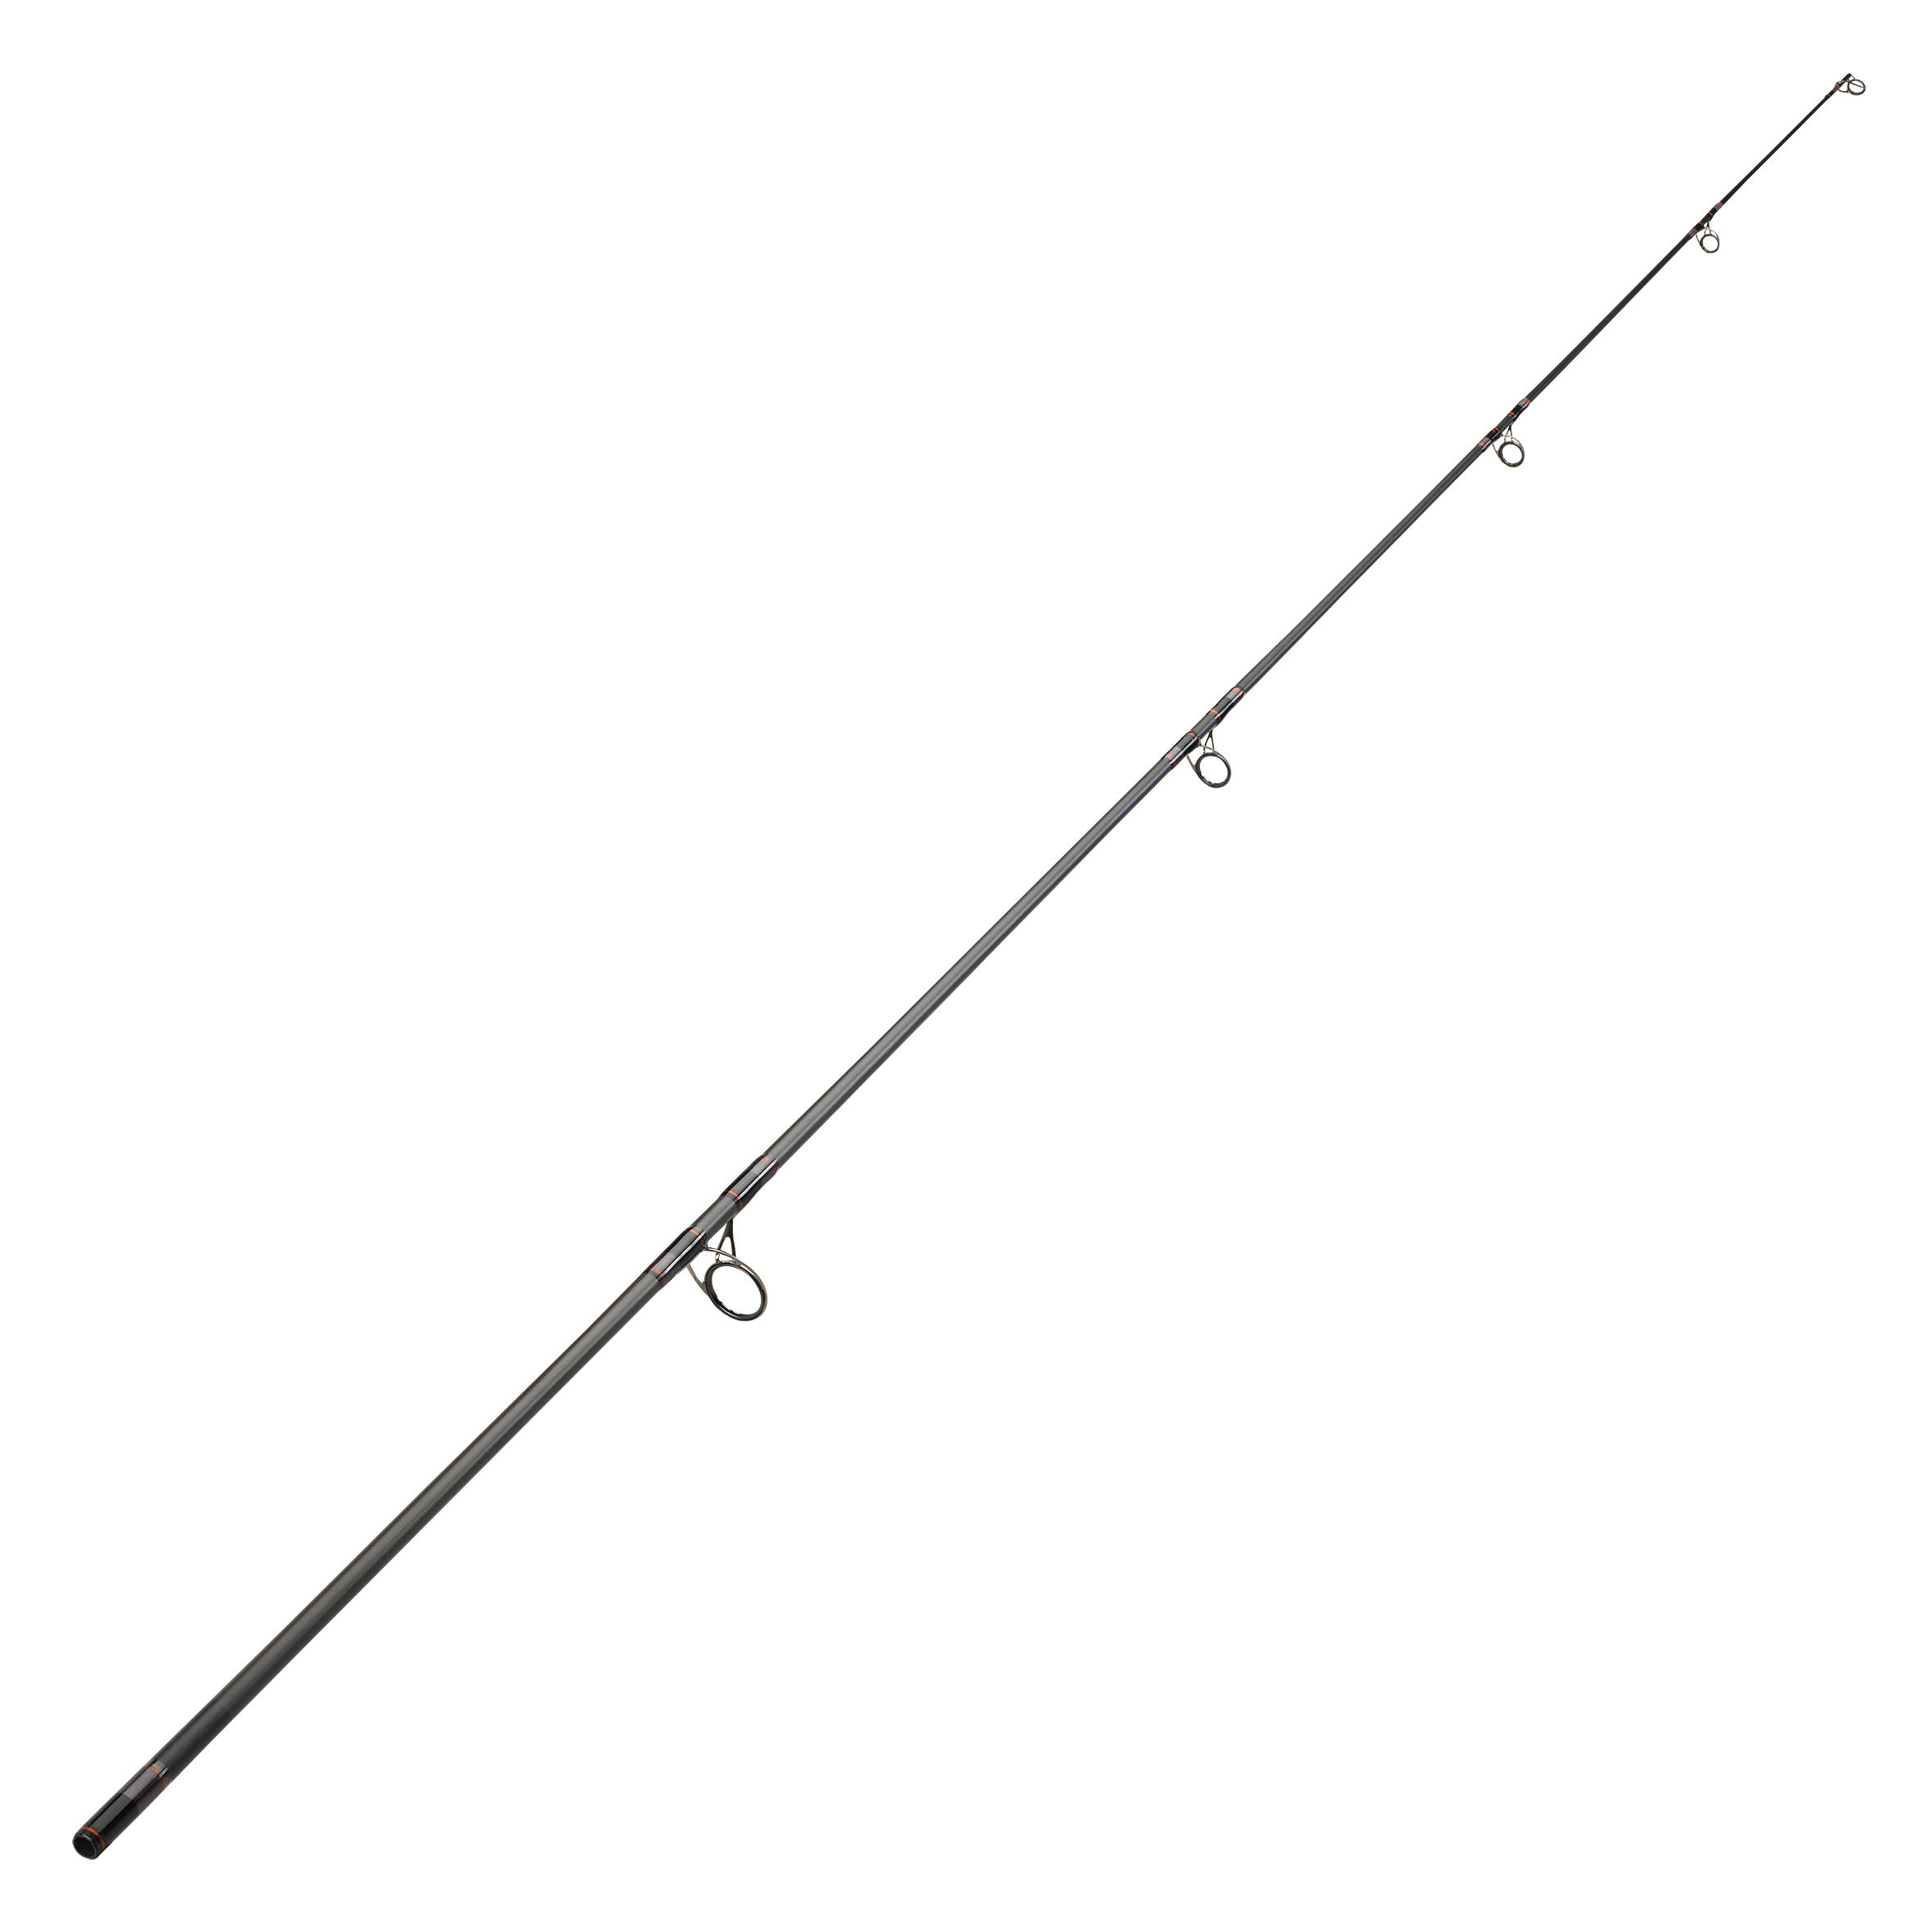 CAPERLAN Decathlon - Cimino ricambio canna Xtrem 9 300 cm (10 piedi) pesca carpa -